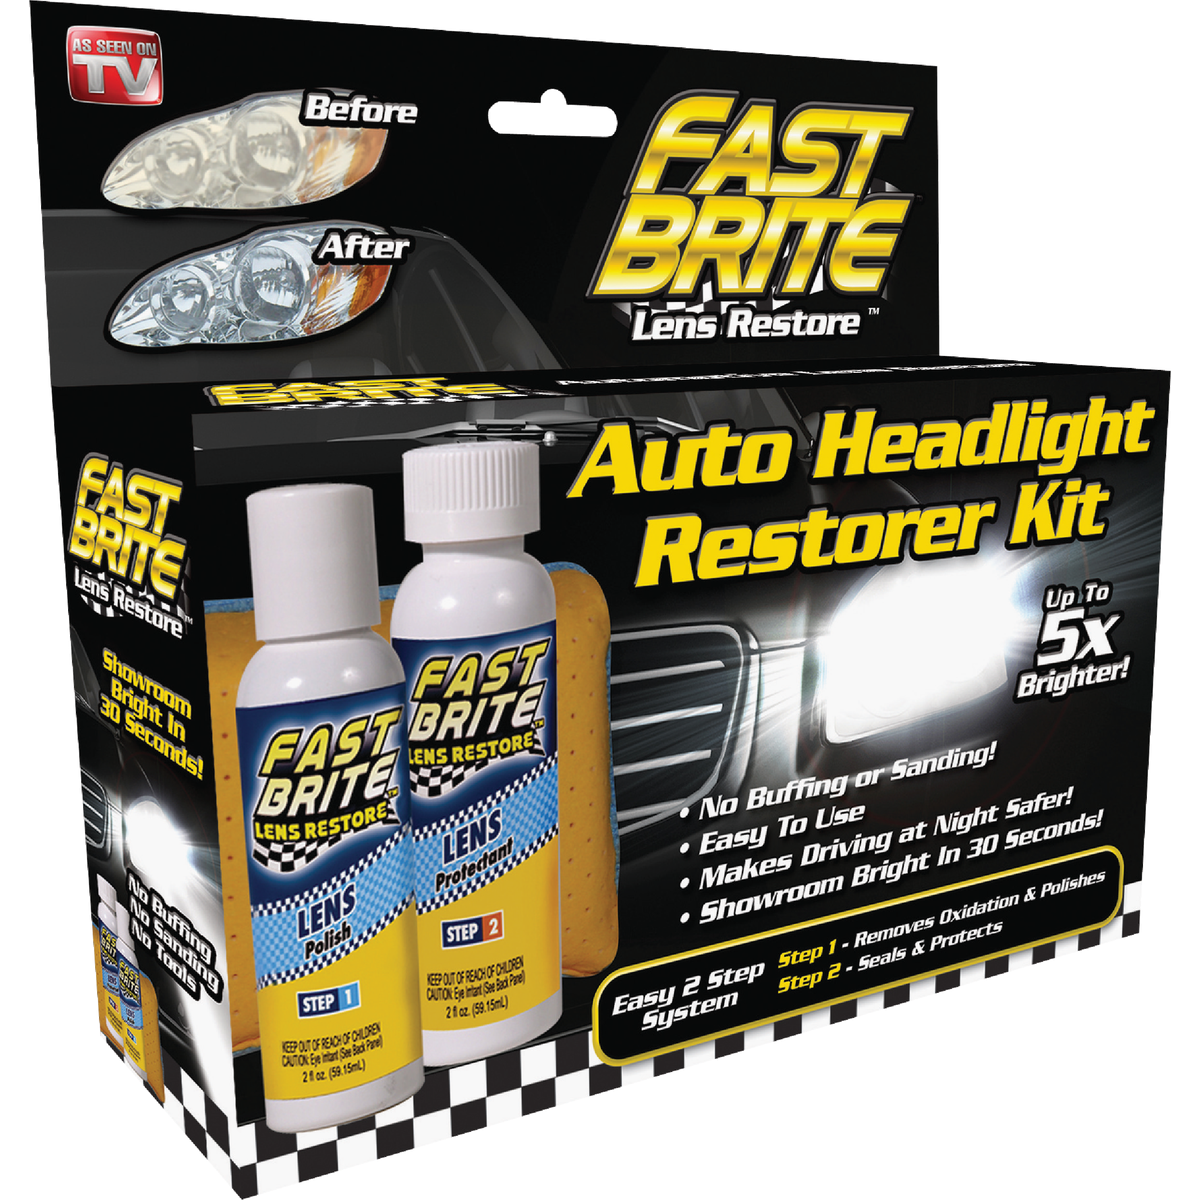 Headlight Restorer